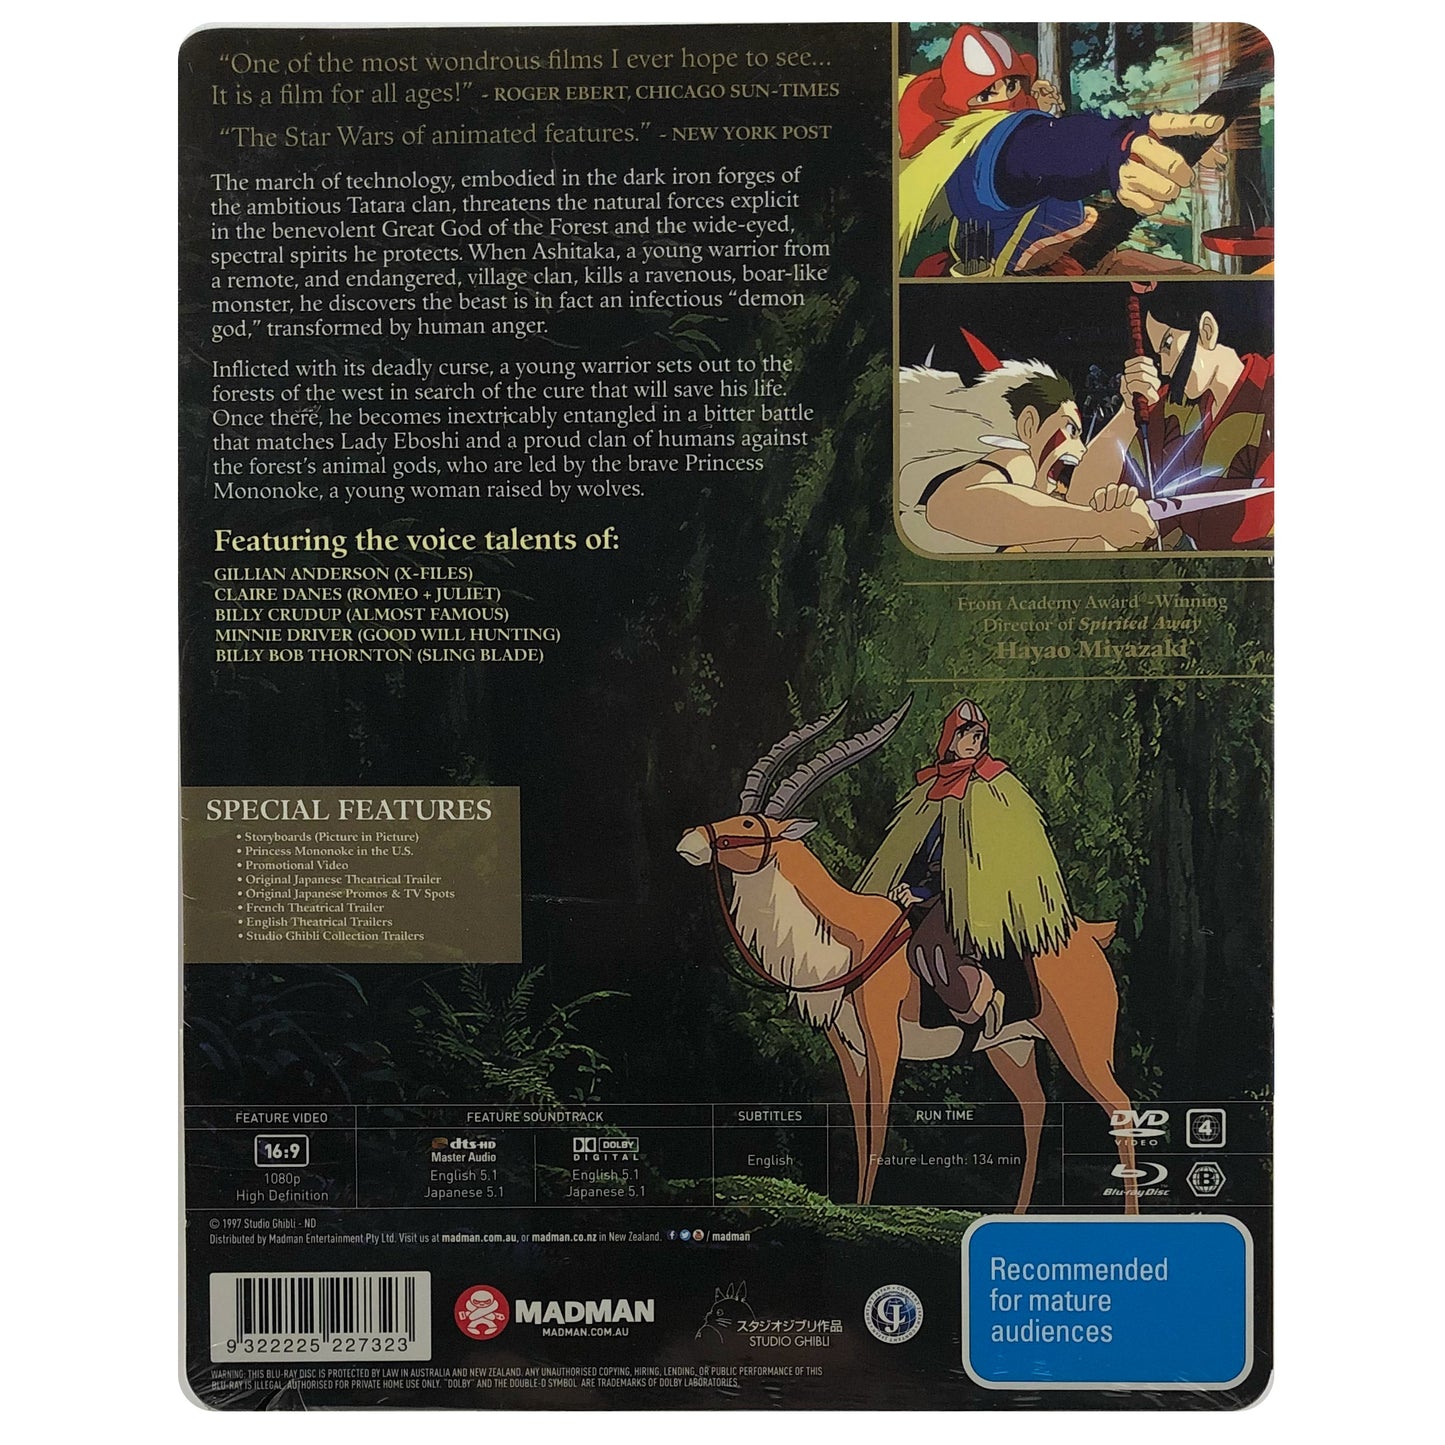 Princess Mononoke Blu-Ray Steelbook